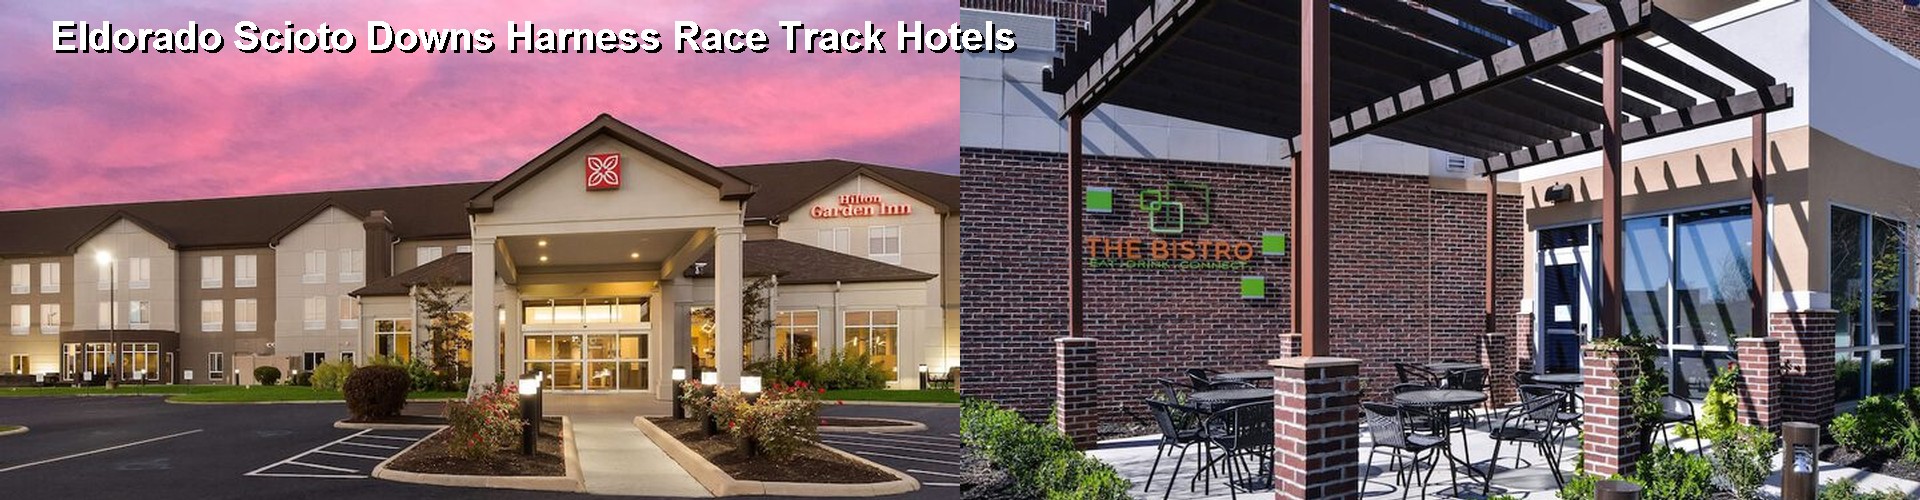 5 Best Hotels near Eldorado Scioto Downs Harness Race Track